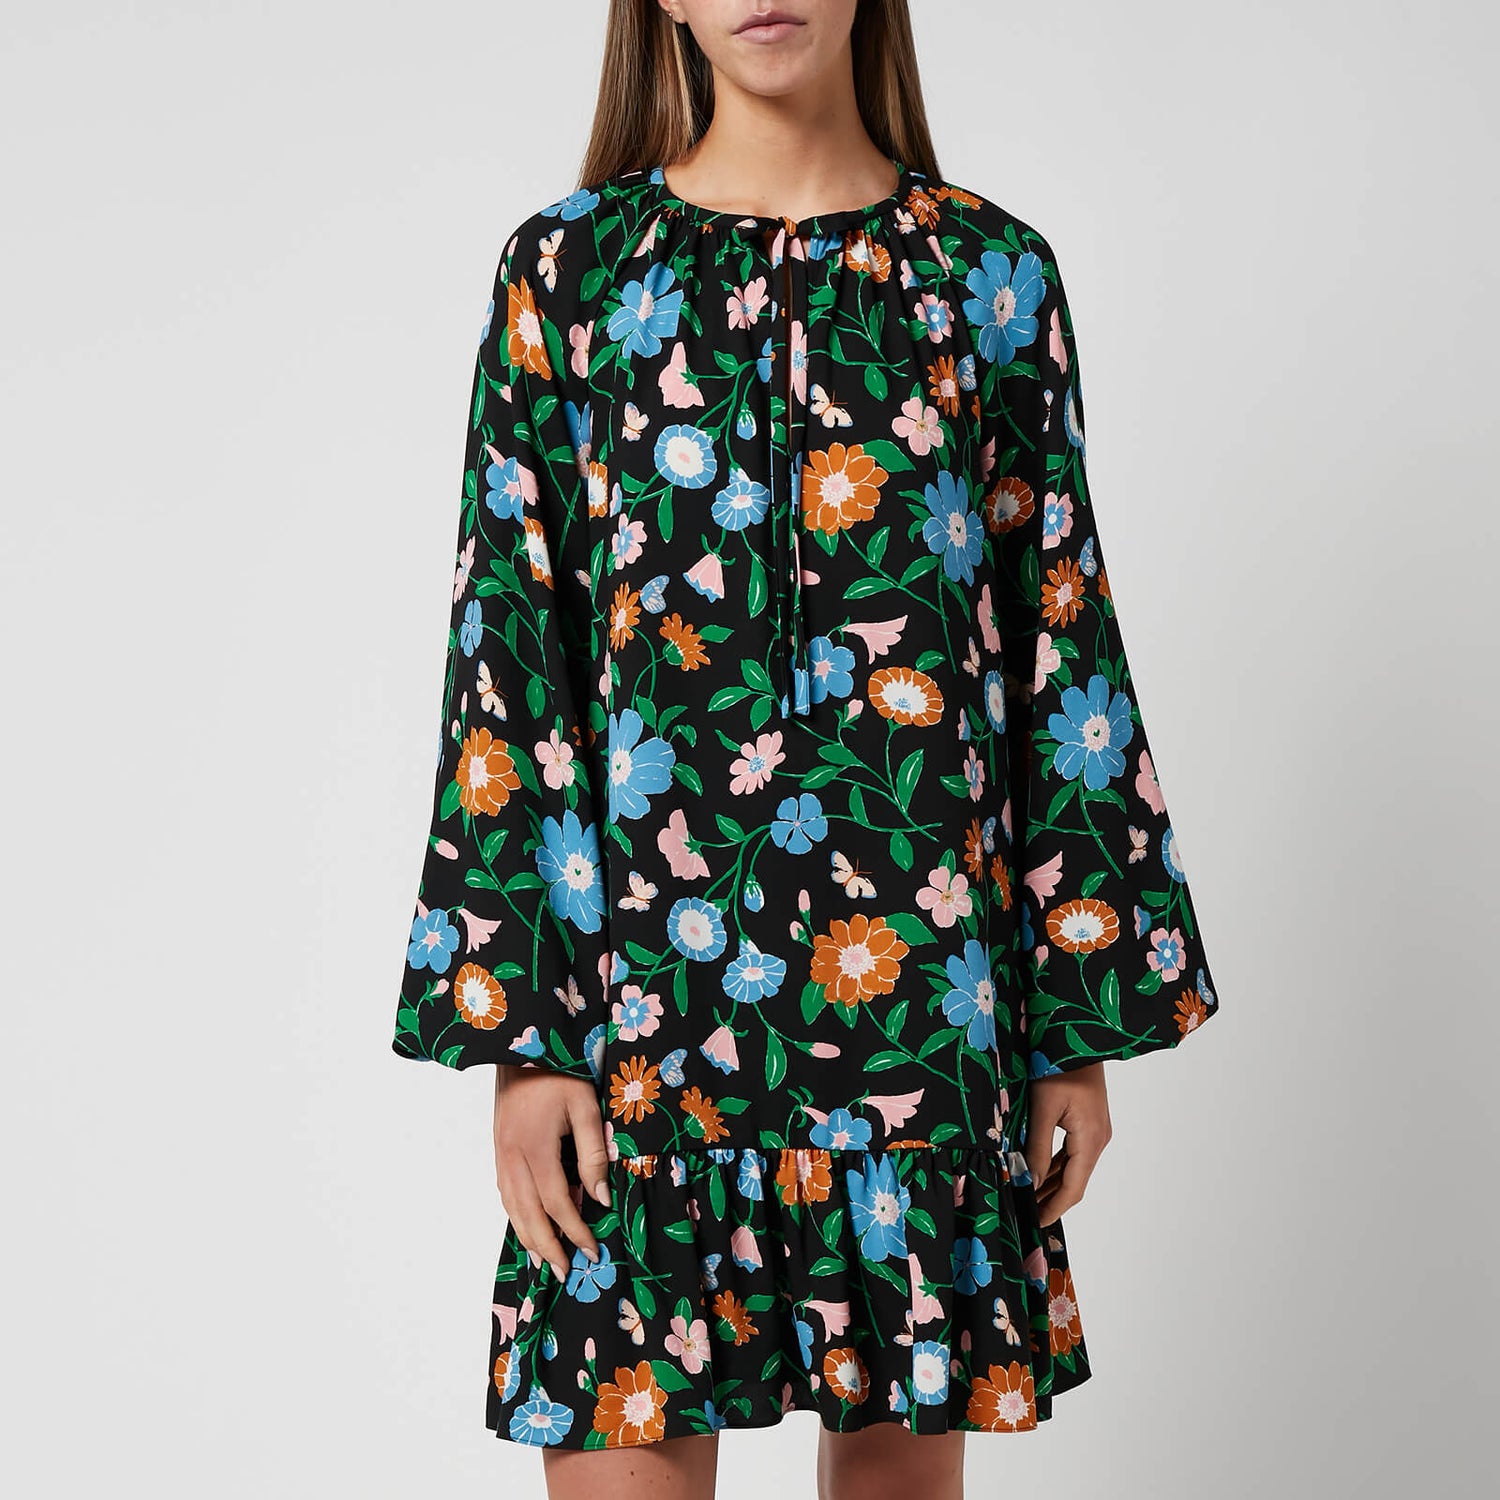 Kate Spade New York Women's Floral Garden Tie Neck Dress - Multi - XS